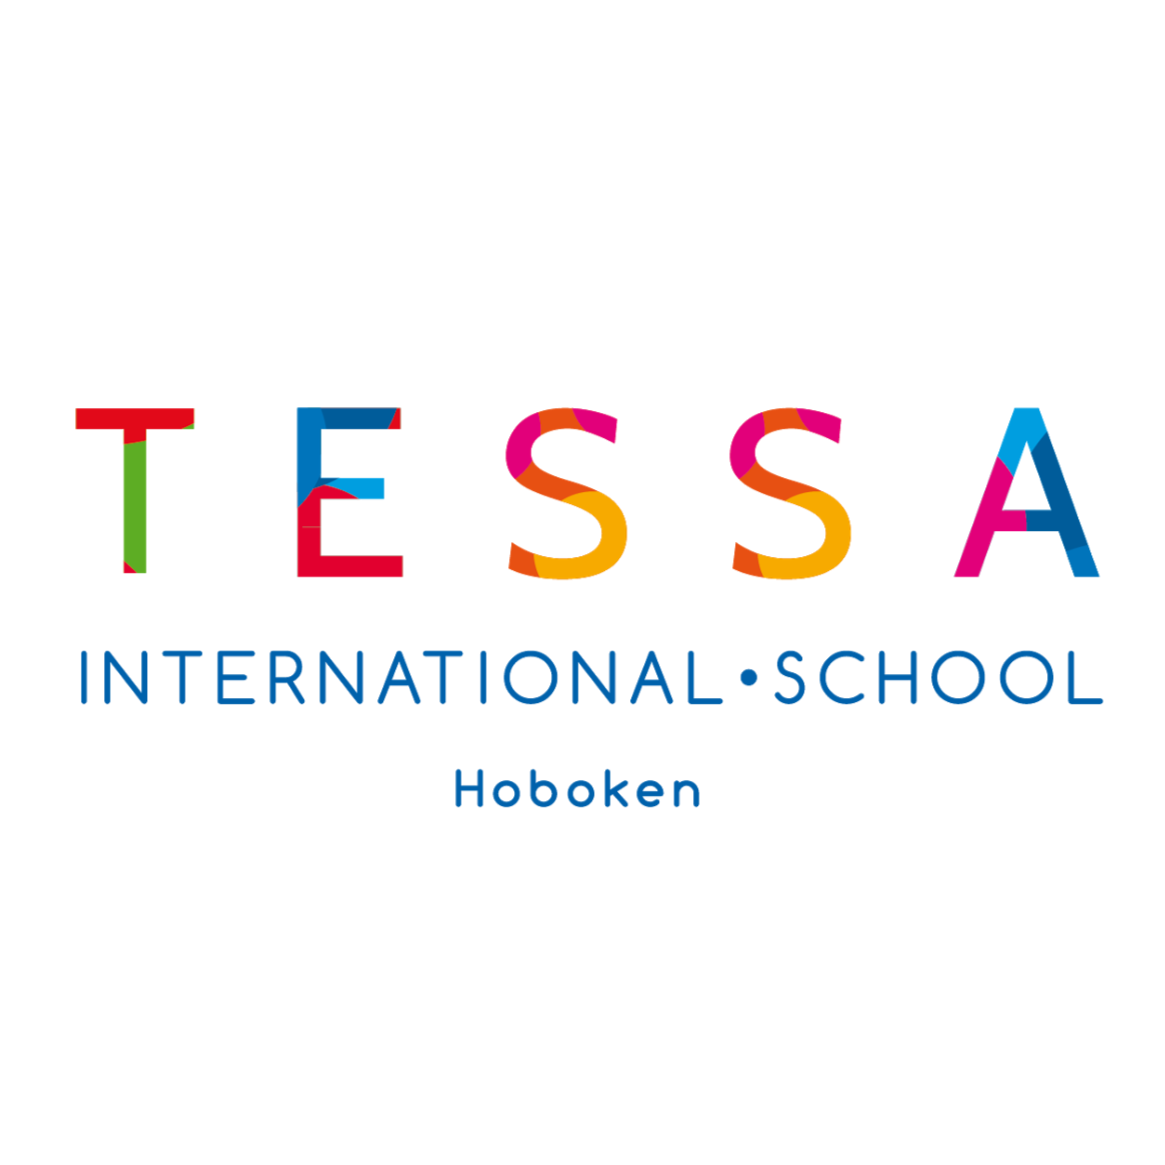 Photo of Tessa International School in Hoboken City, New Jersey, United States - 1 Picture of Point of interest, Establishment, School